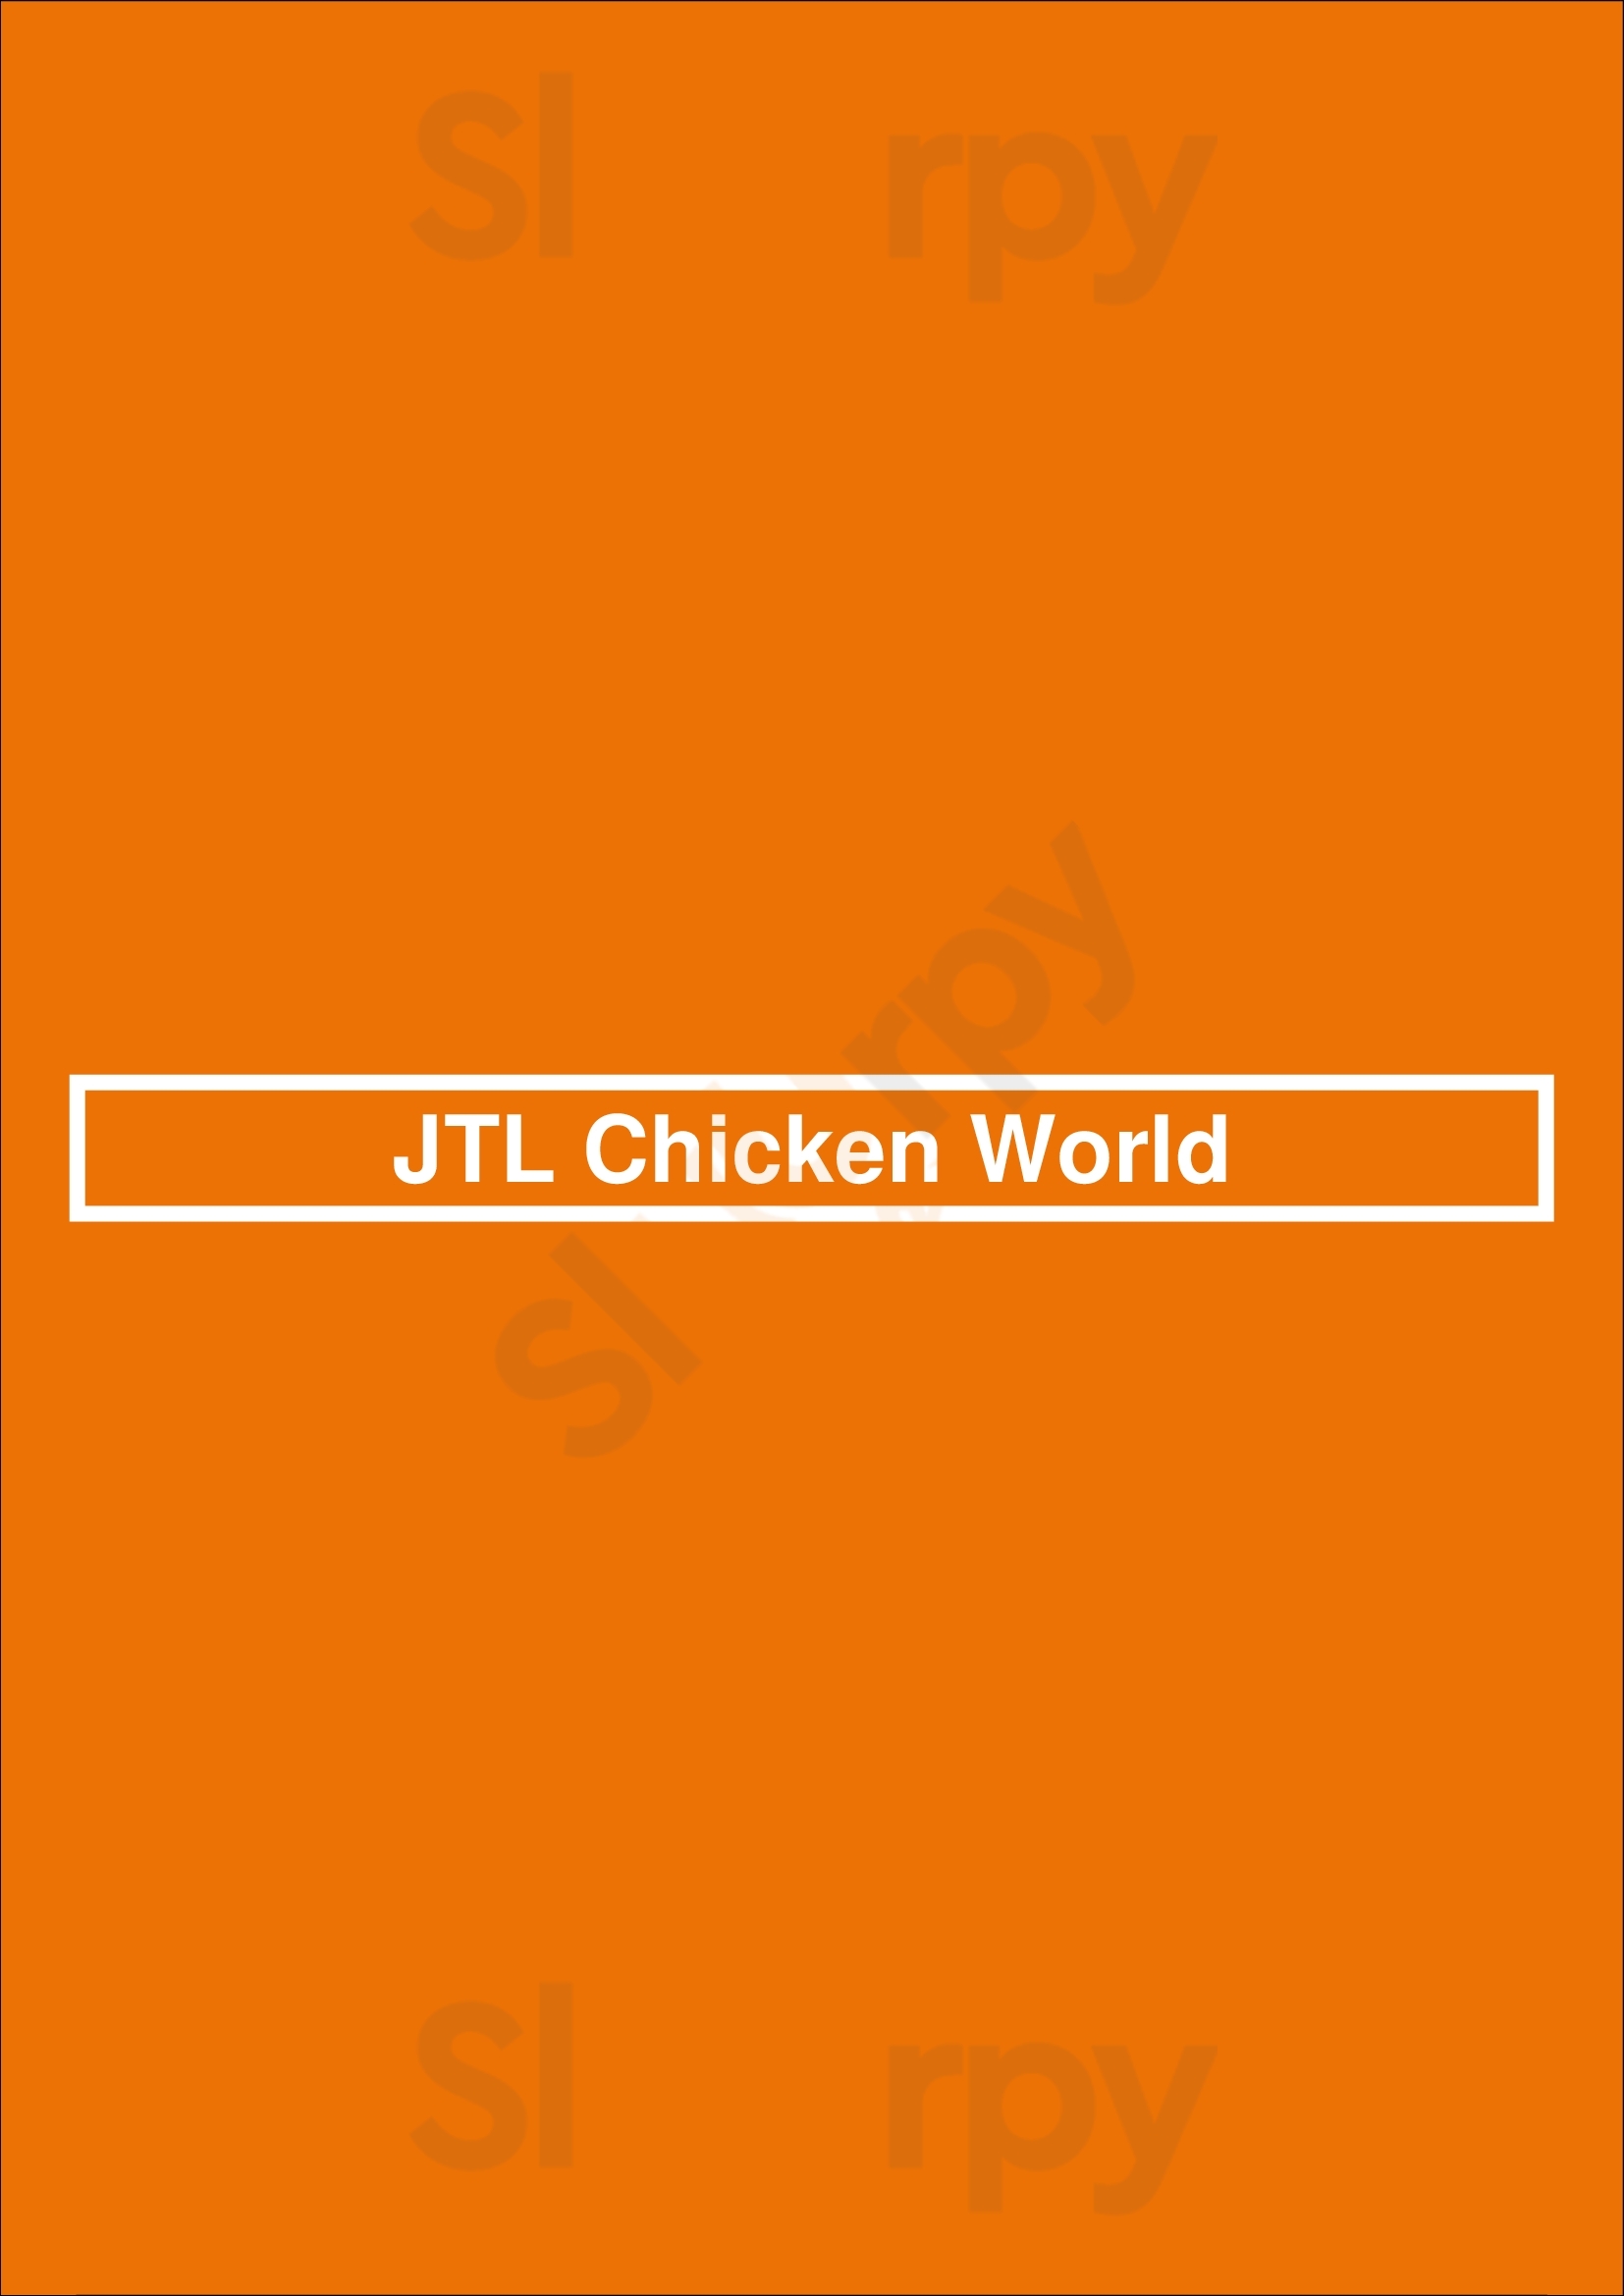 Jtl Chicken World Coquitlam Menu - 1